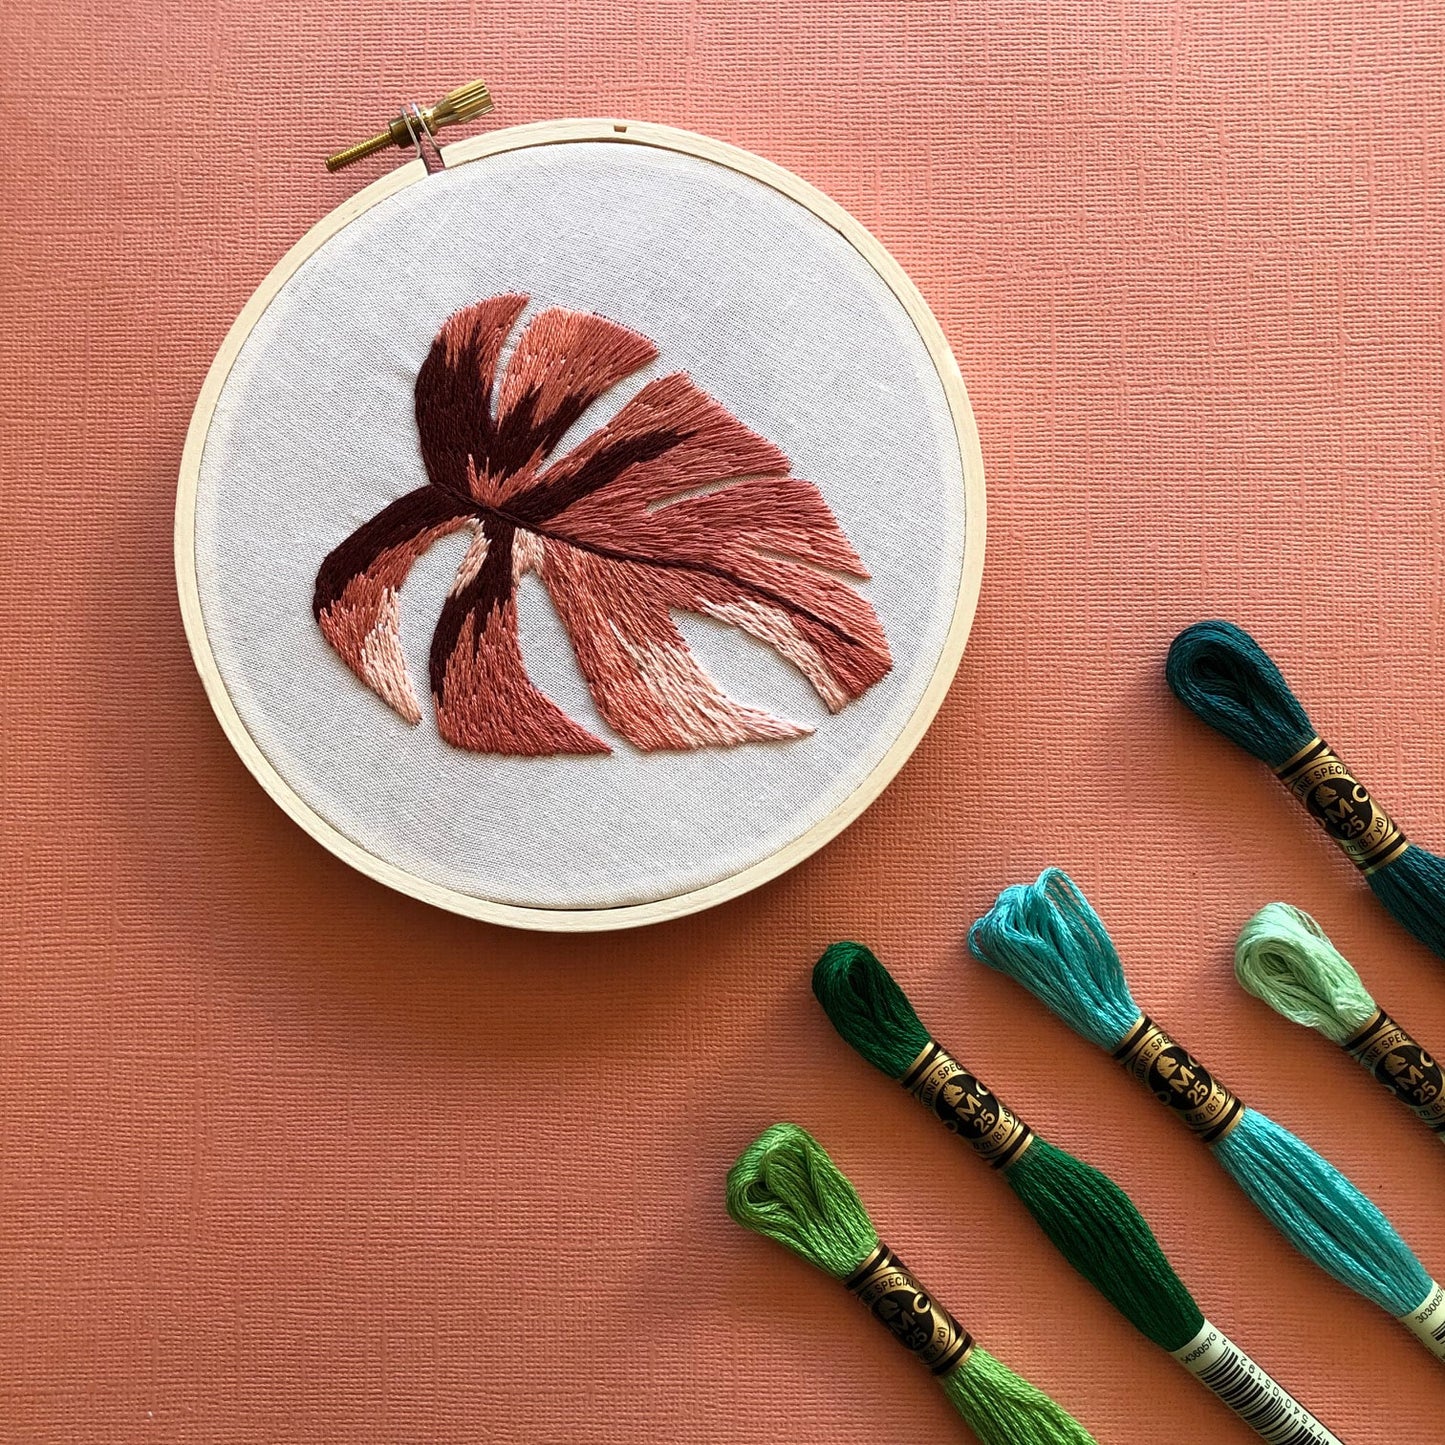 Variegated Monstera- DIY Beginner Hand Embroidery Kit